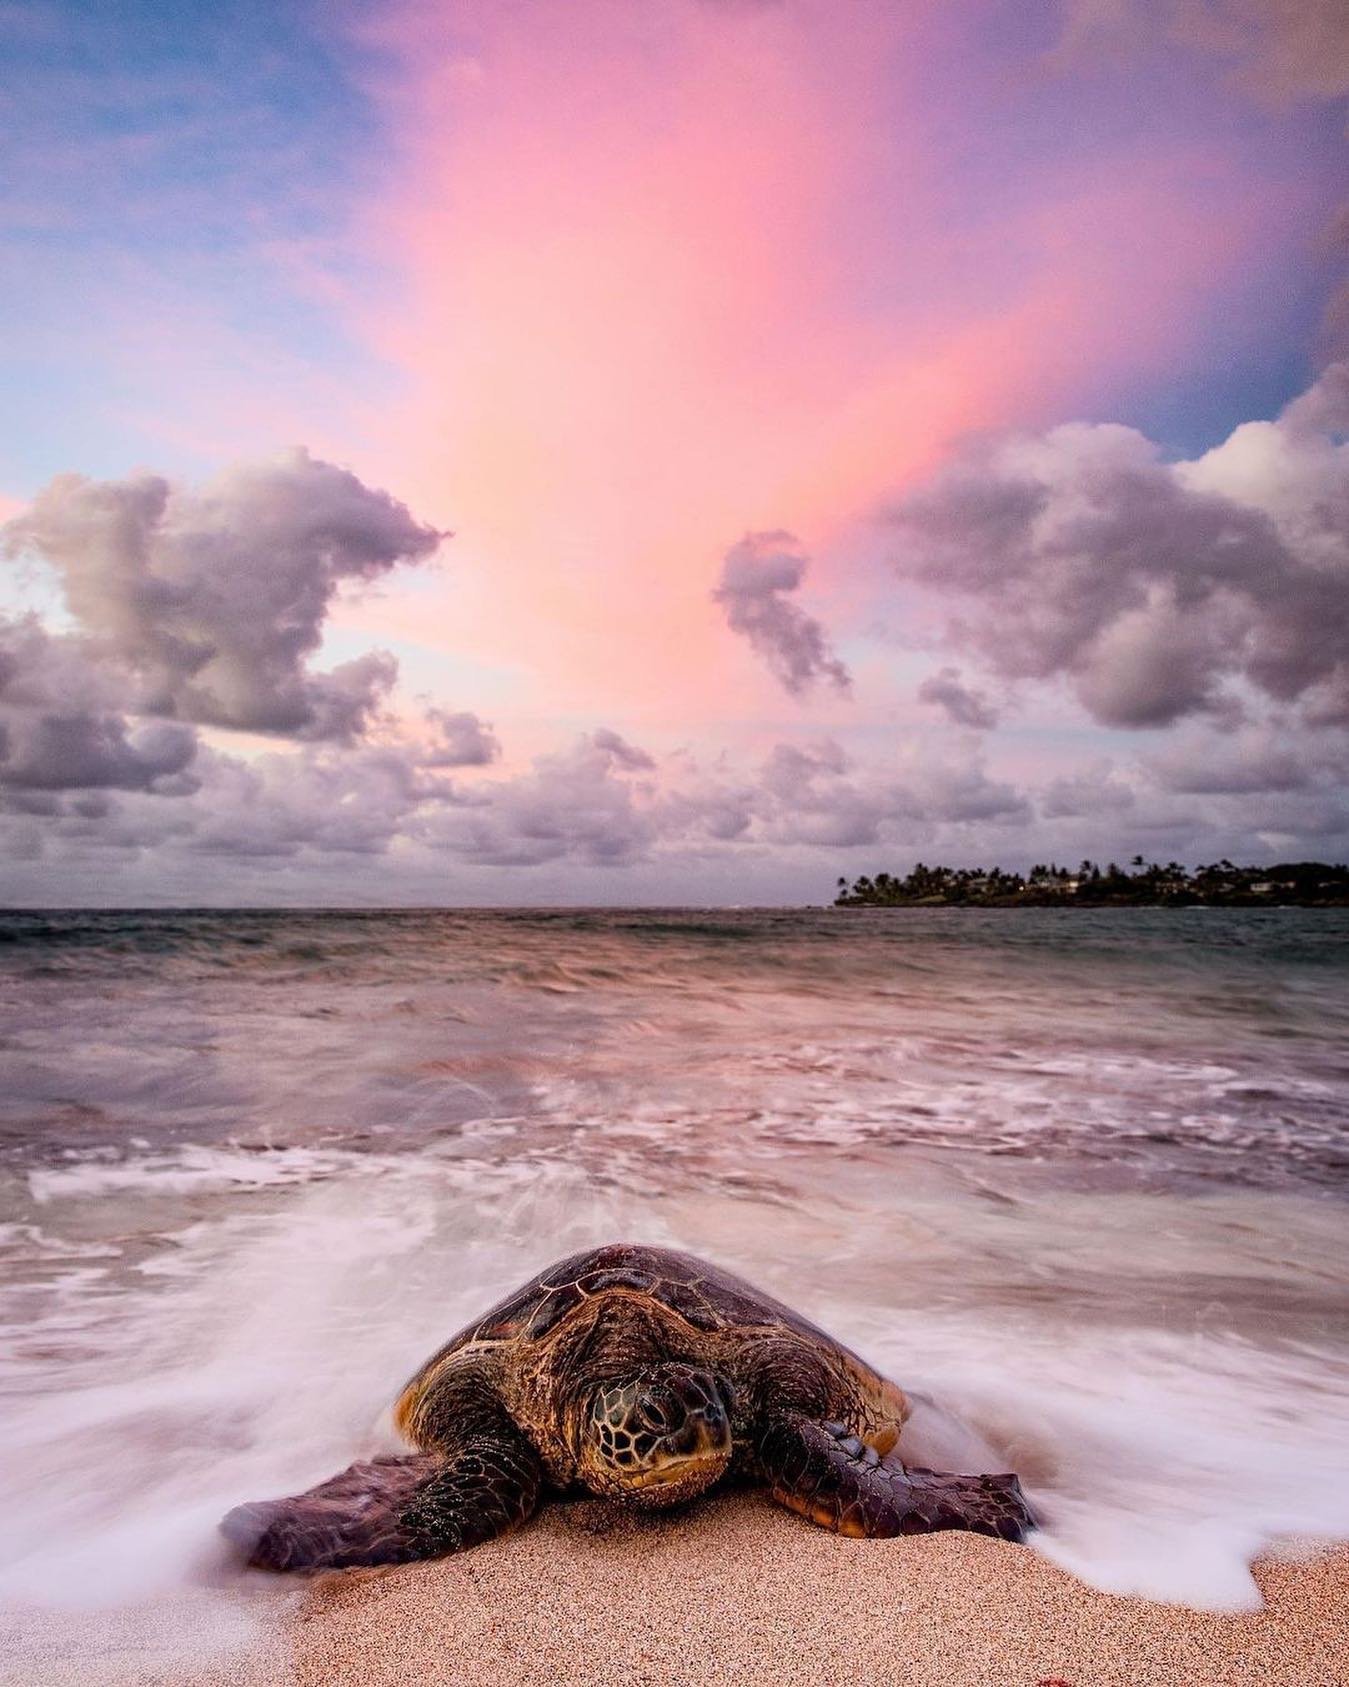 sea turtle conservation